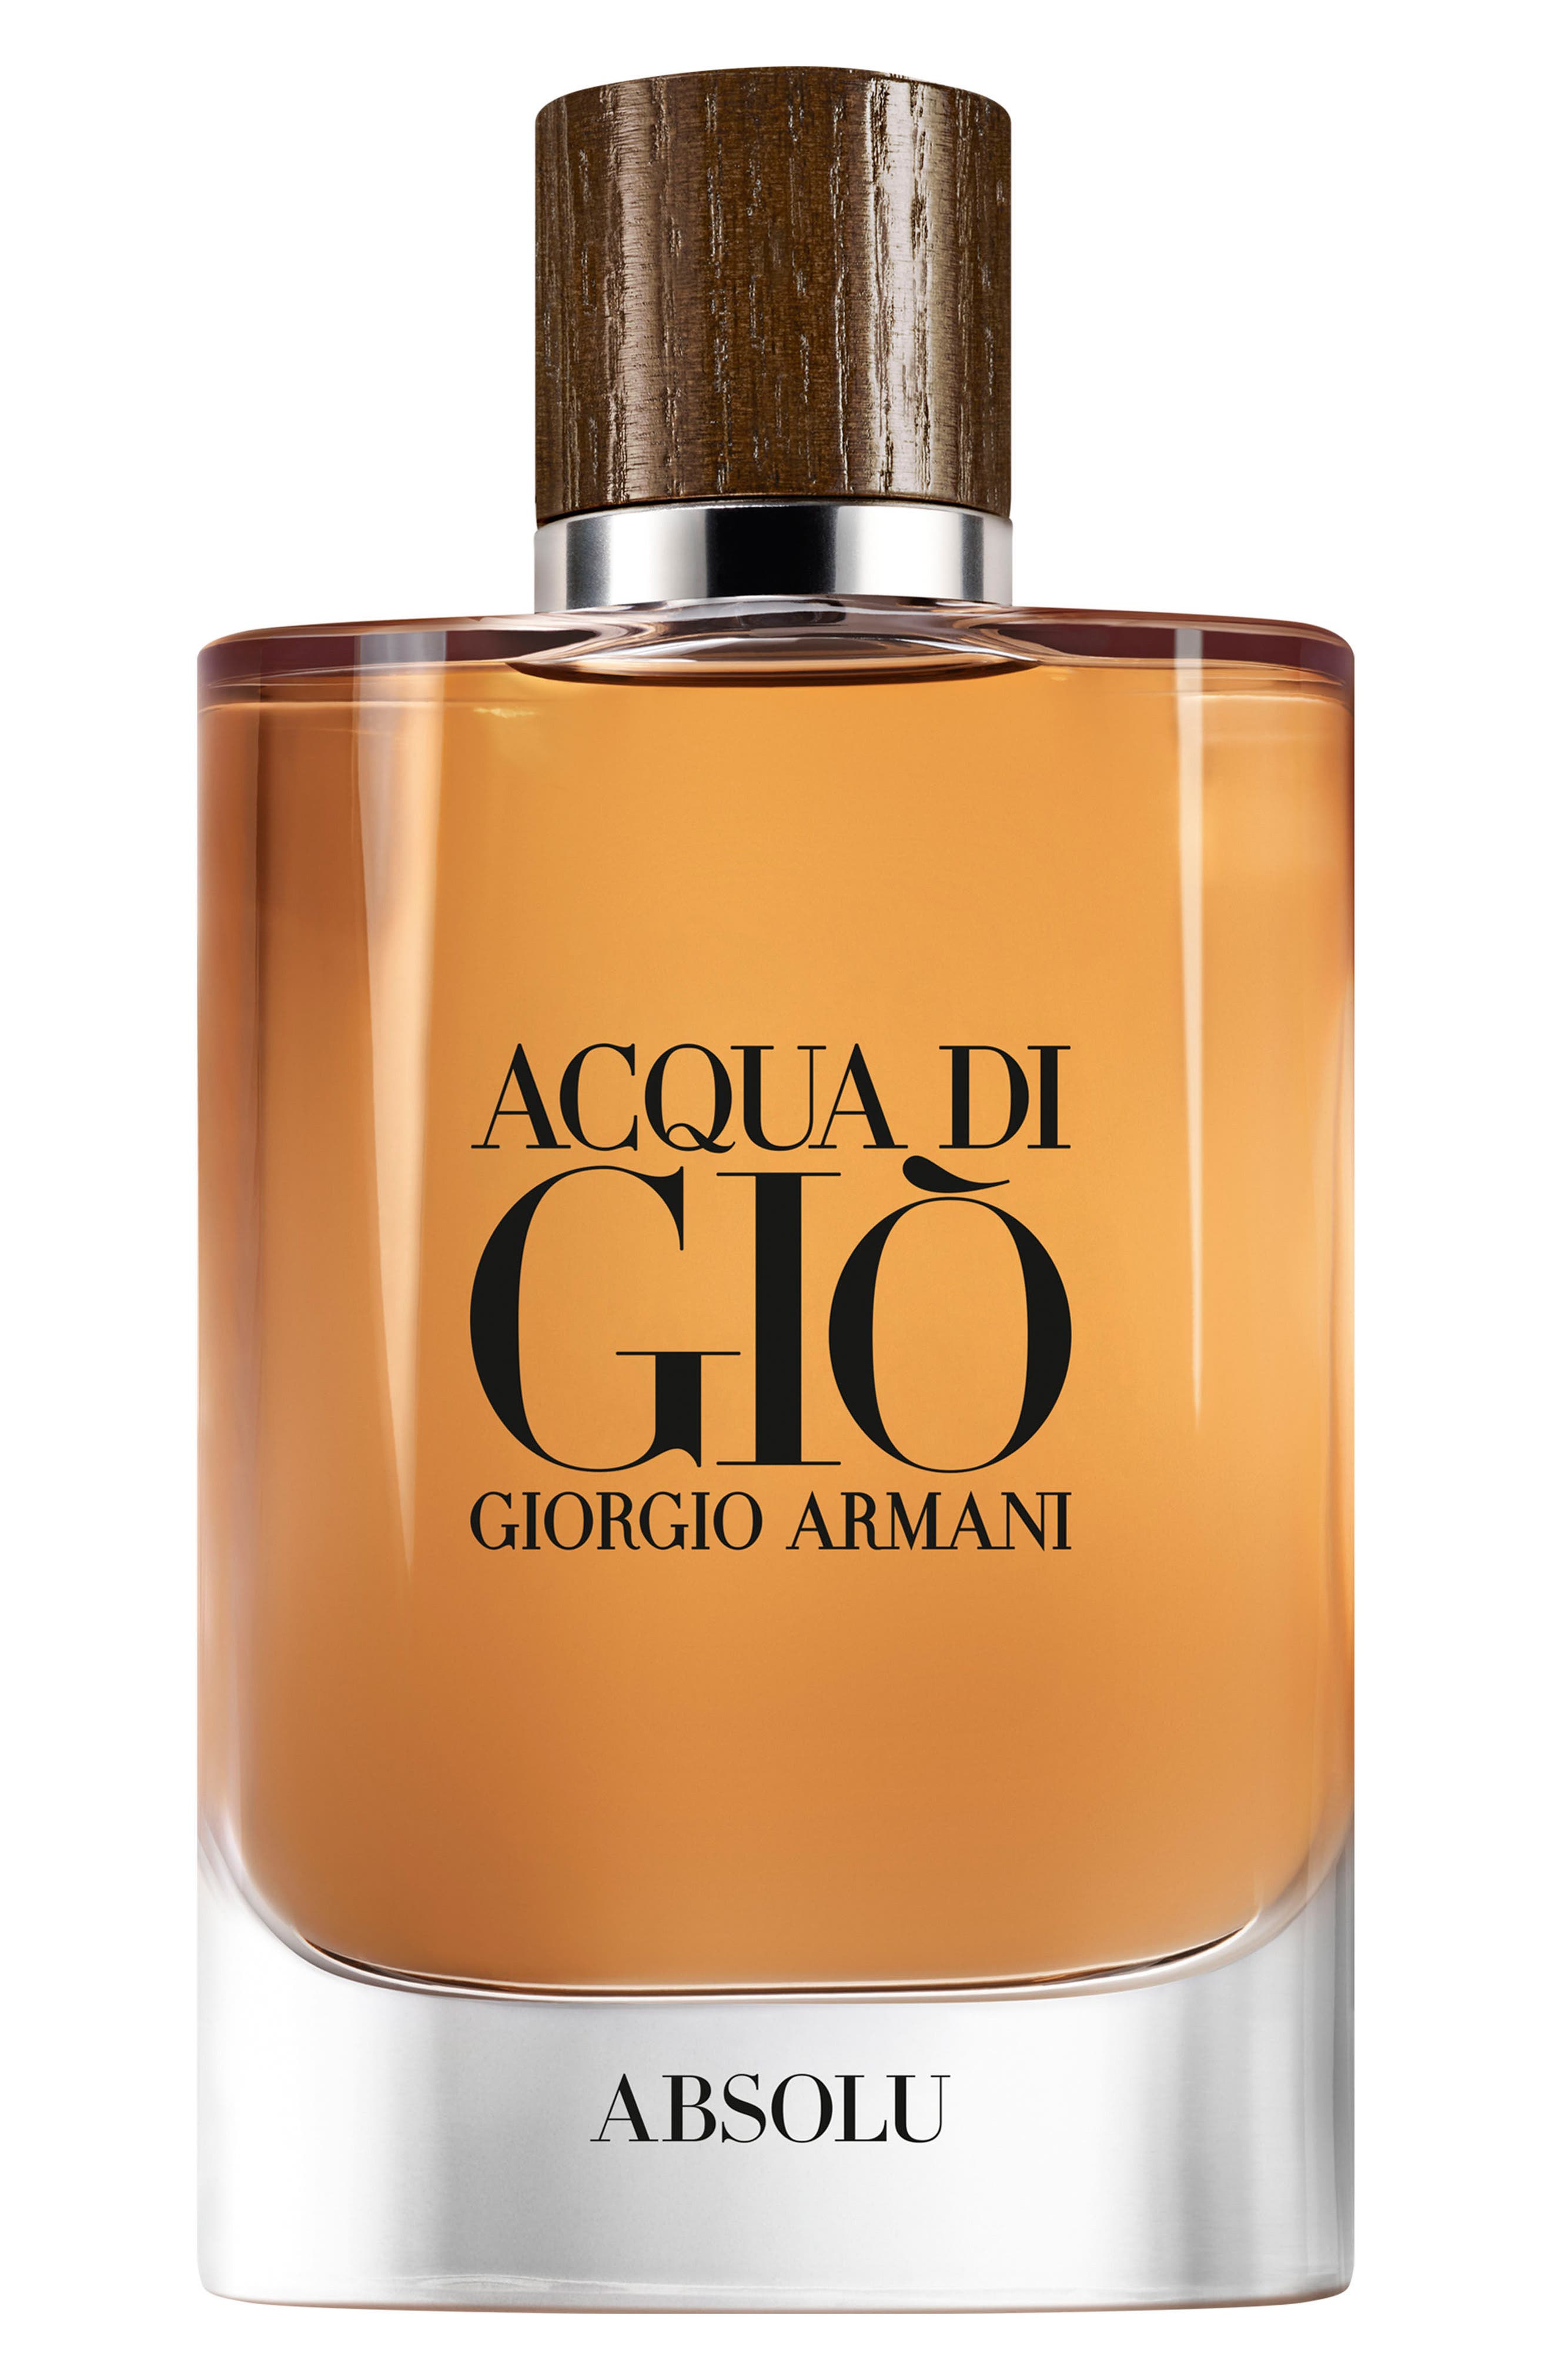 Giorgio Armani Acqua di Gio Absolu Eau de Parfum Fragrance at Nordstrom, Size 6.7 Oz